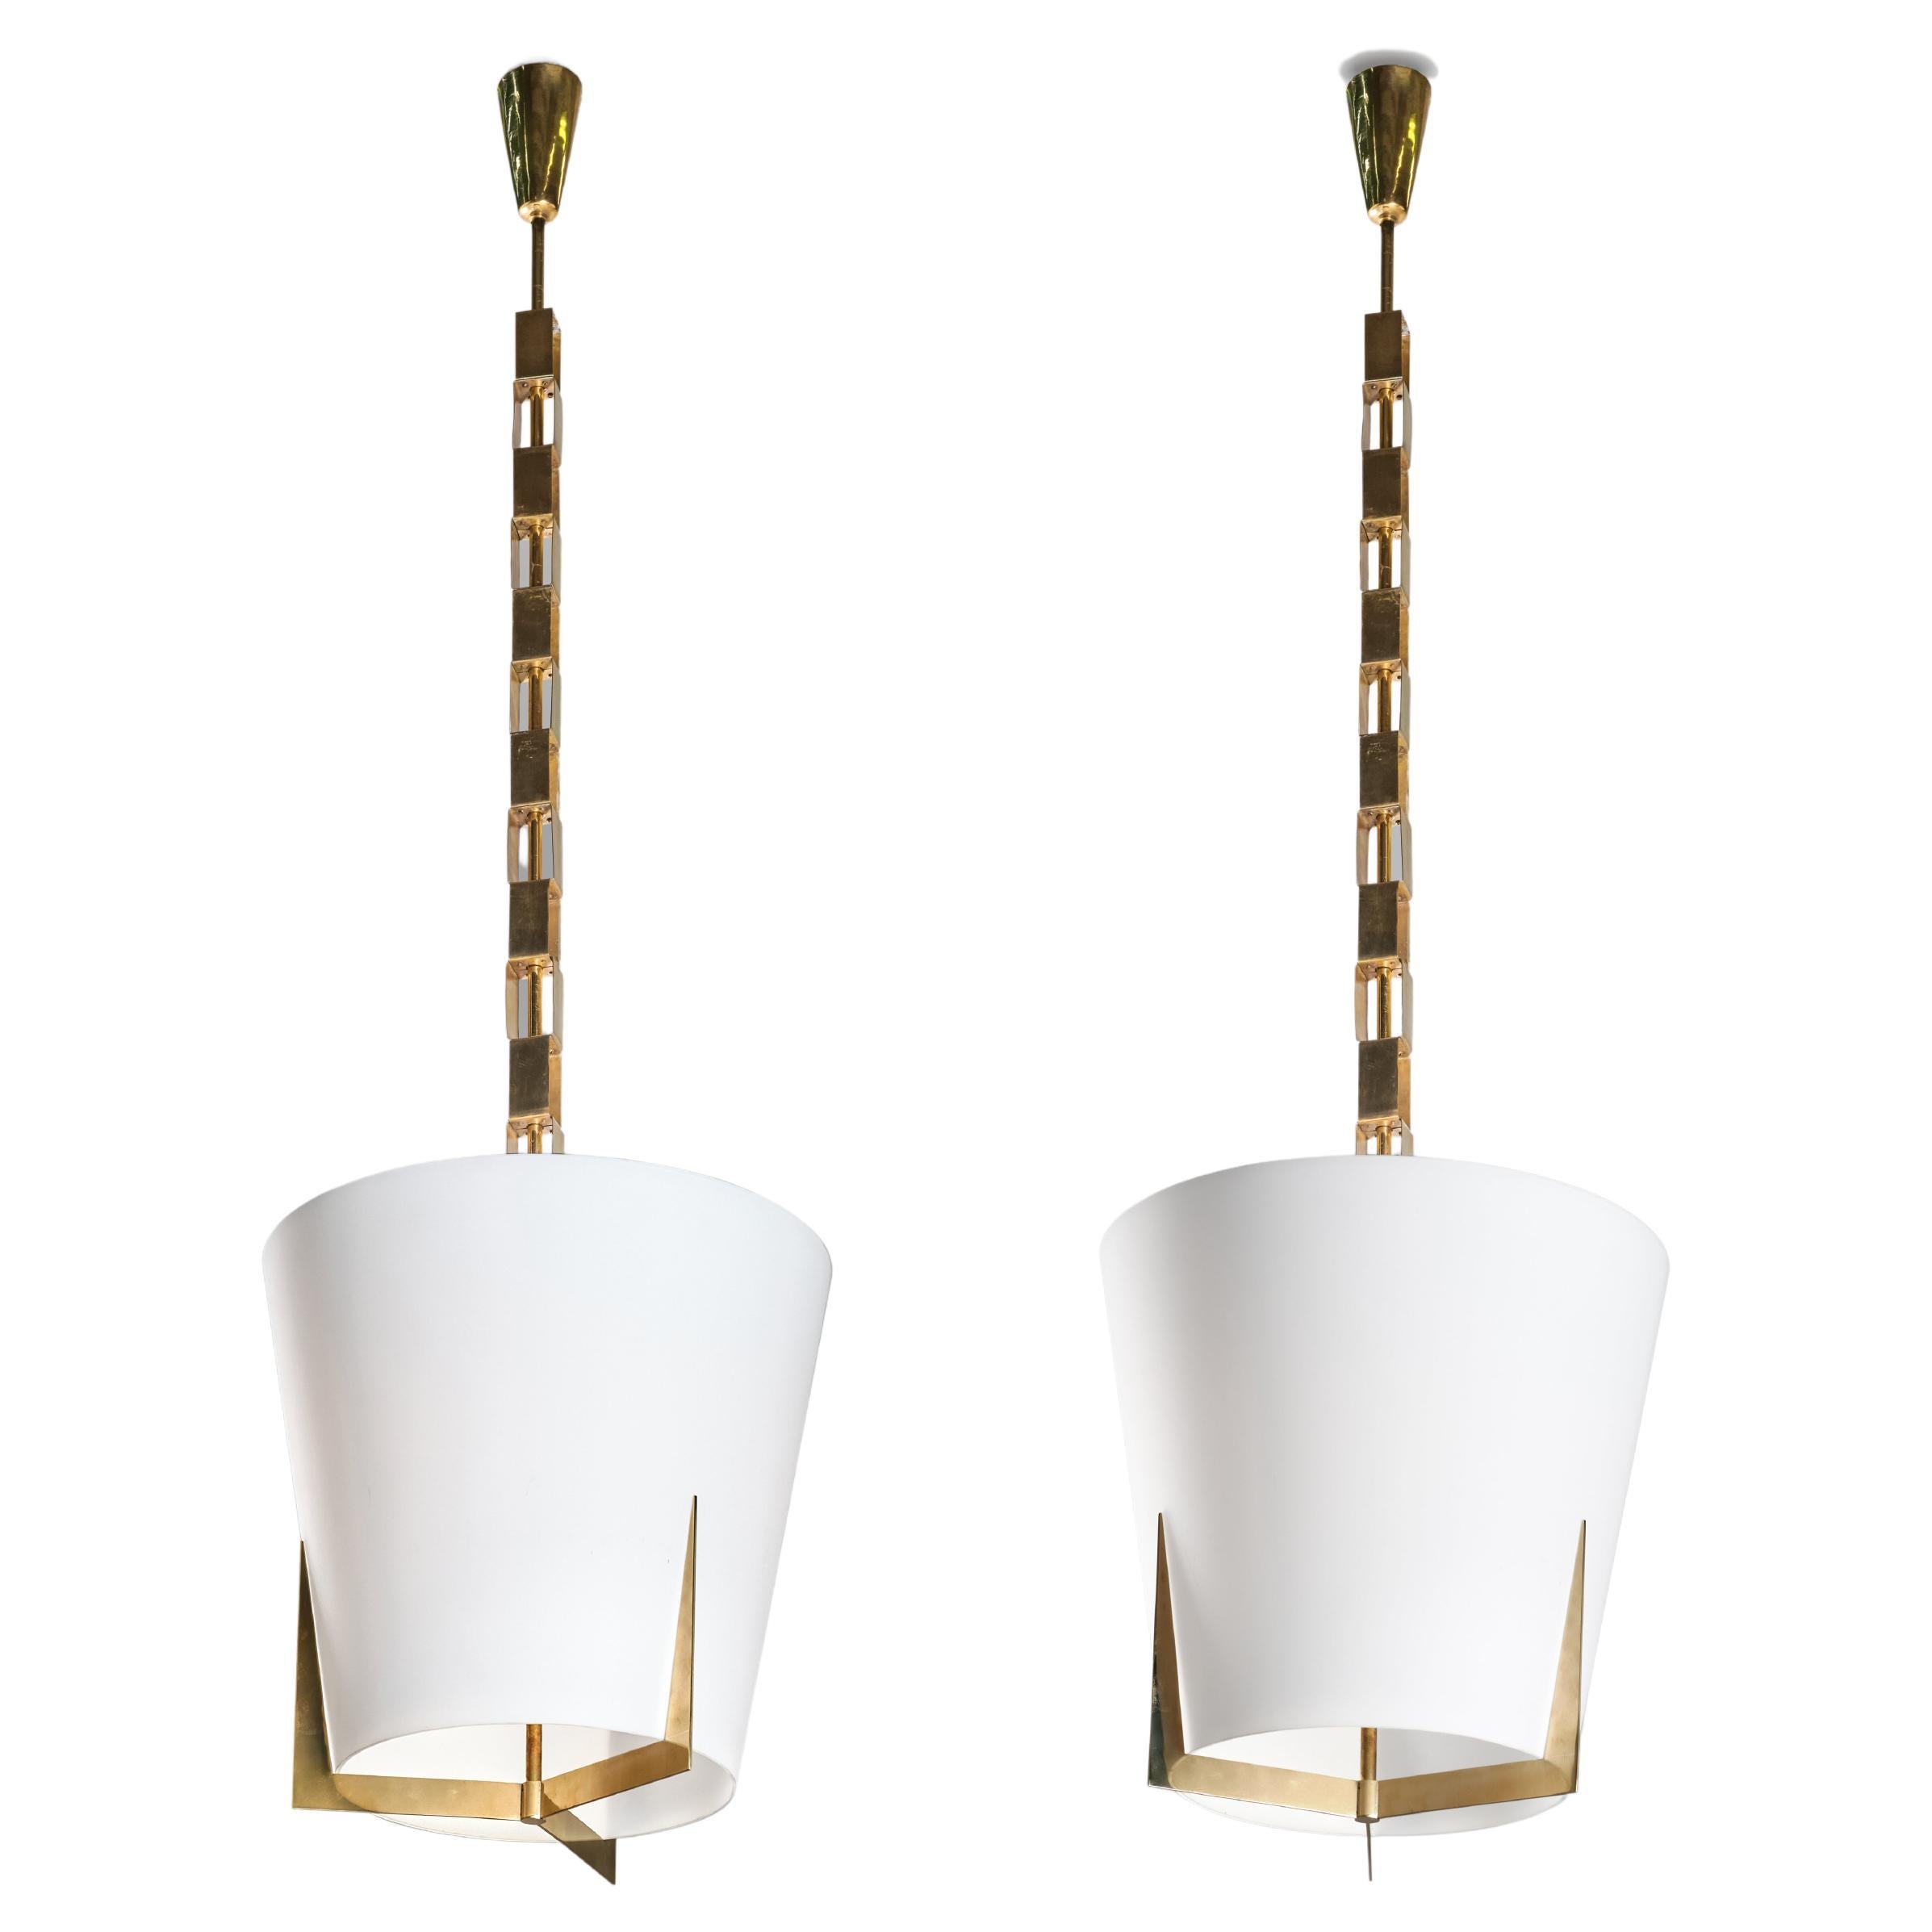 Fontana Arte pair of brass and glass chandeliers, Italian Design 1960 circa For Sale